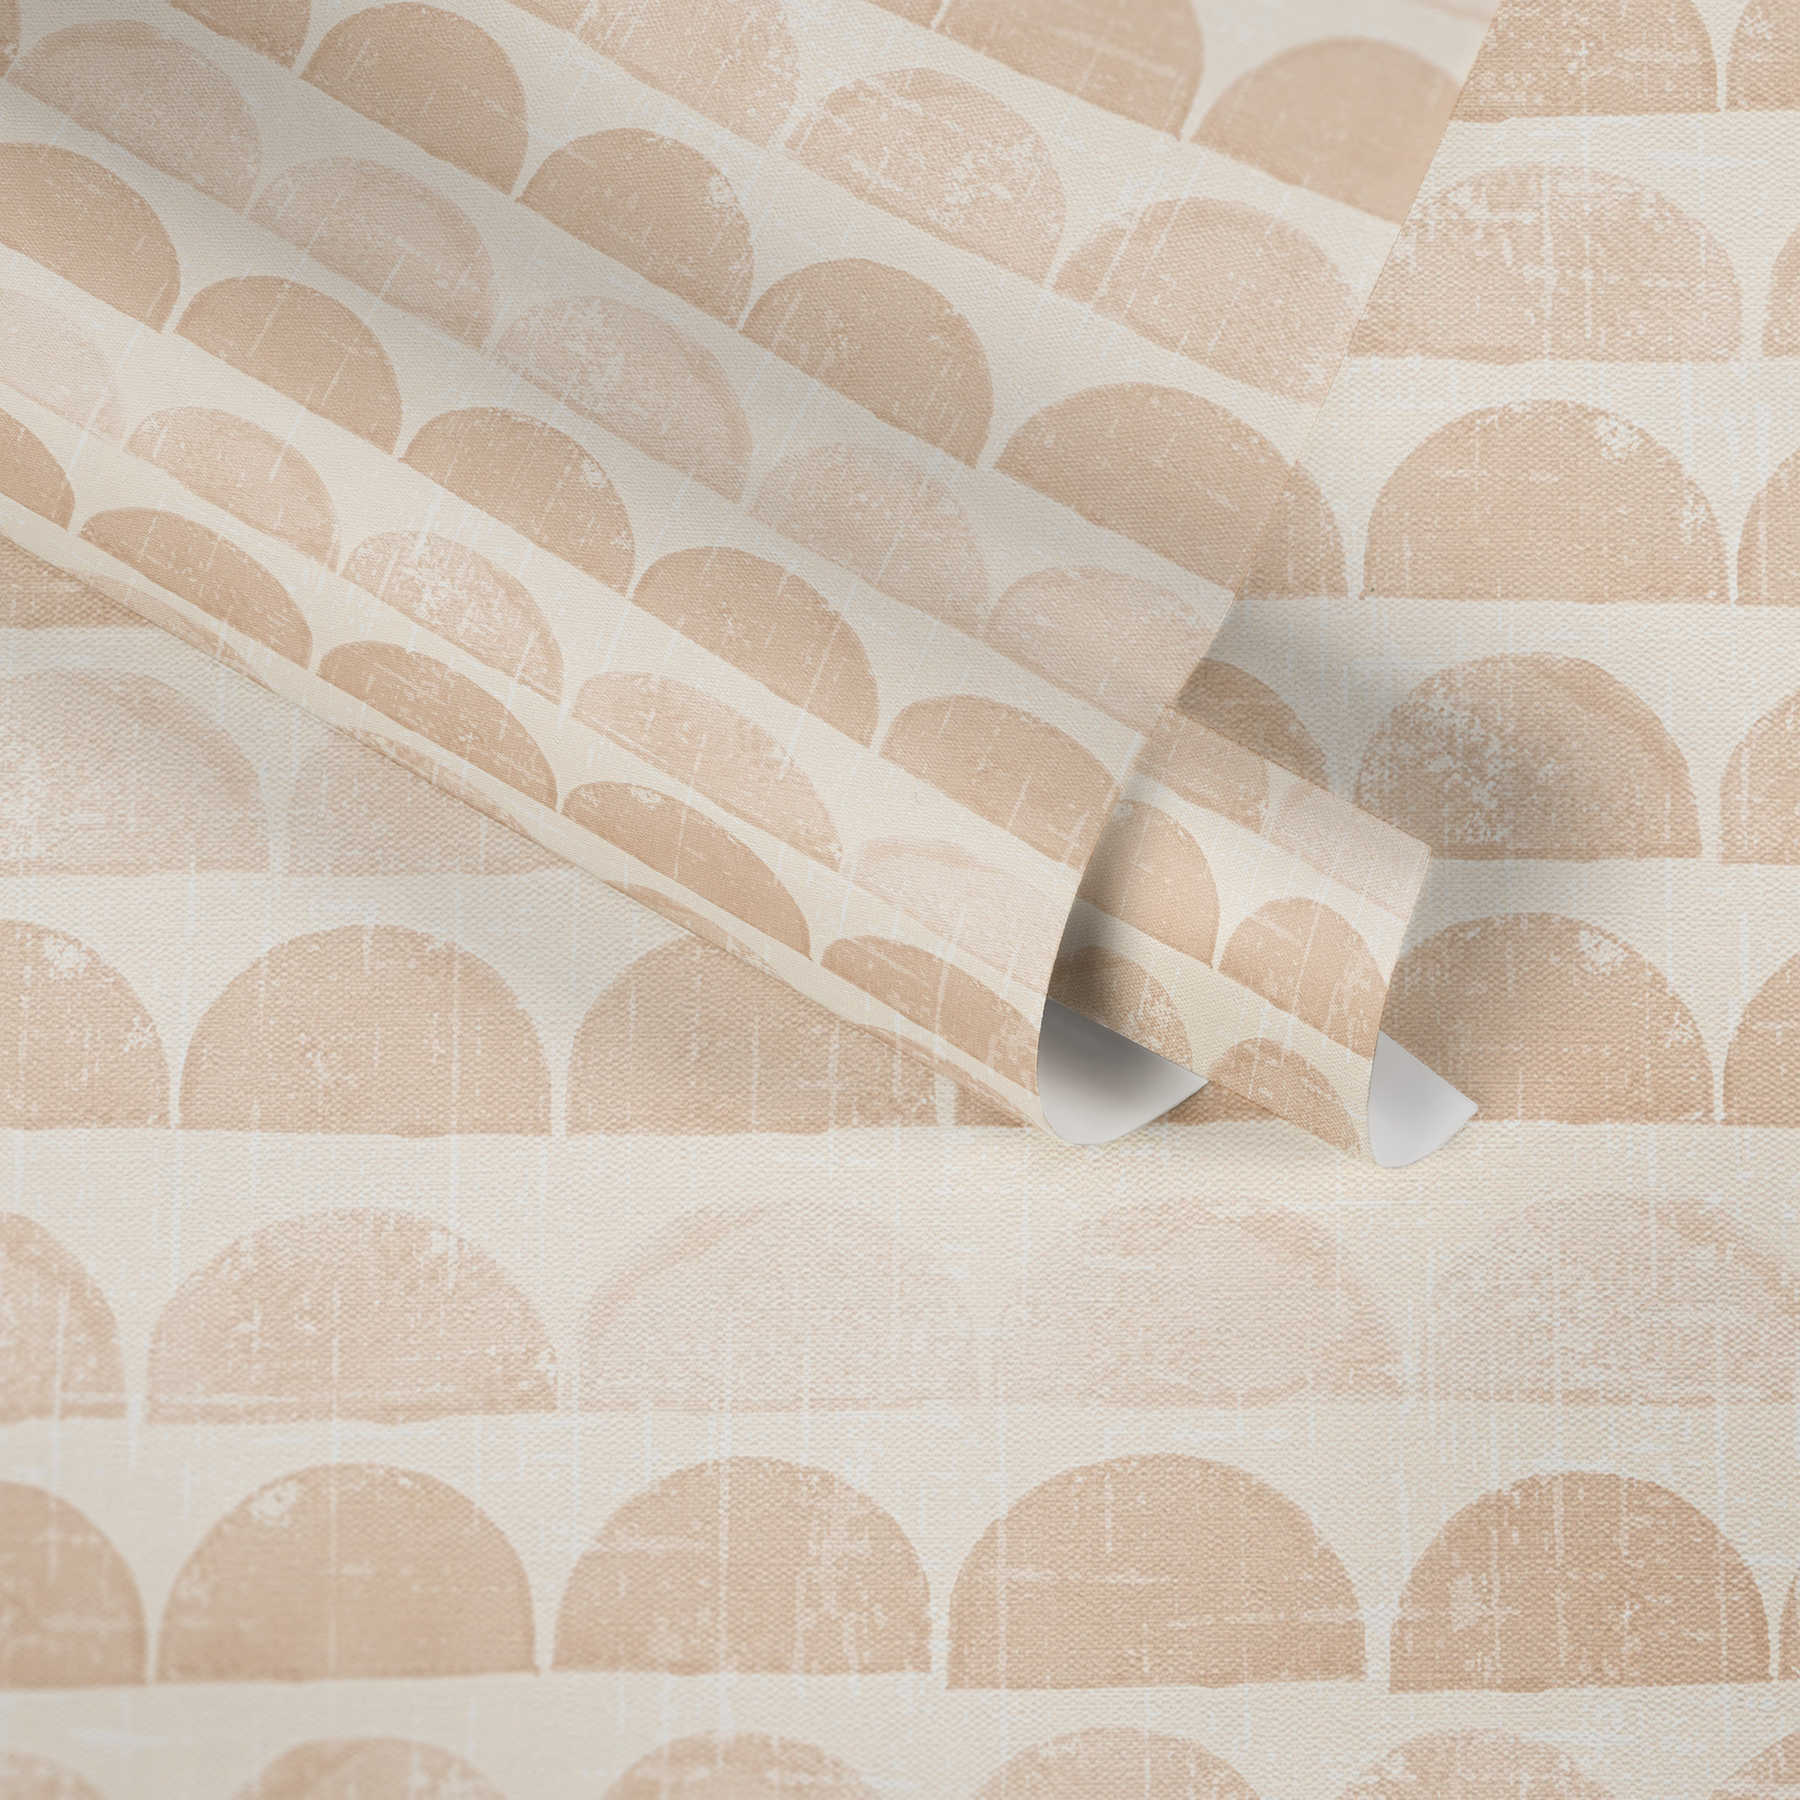             Scandinavian Design Tapete Halbkreis Muster – Beige, Creme
        